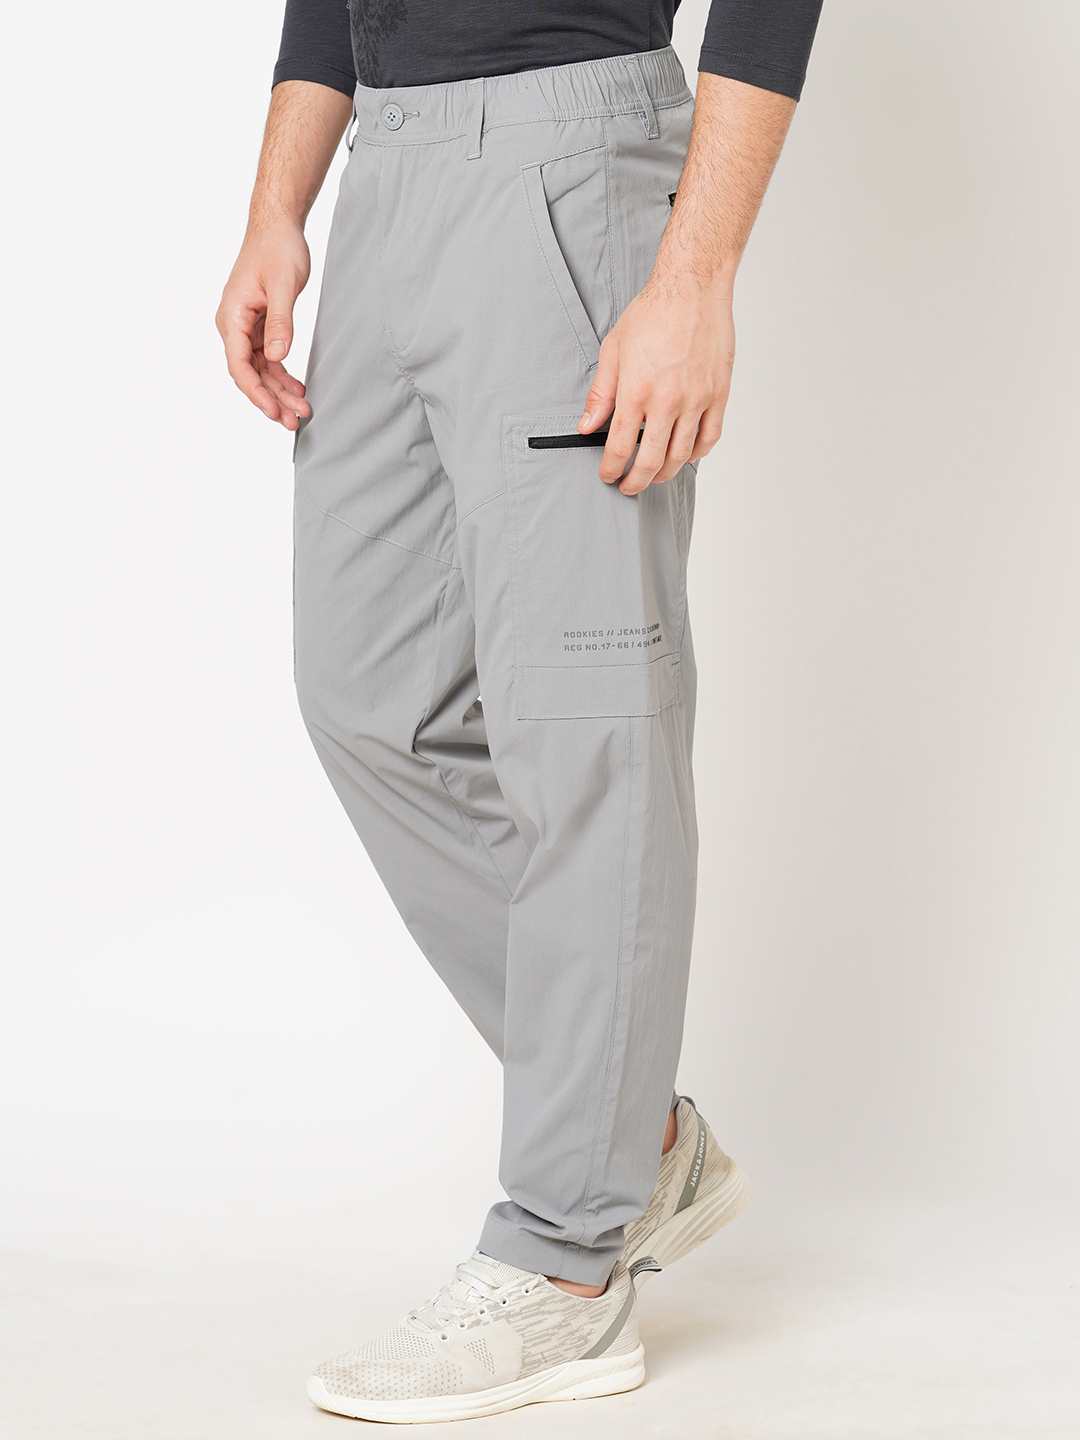 Buy Men Slim Fit Cargo Pants Online at Best Prices in India - JioMart.